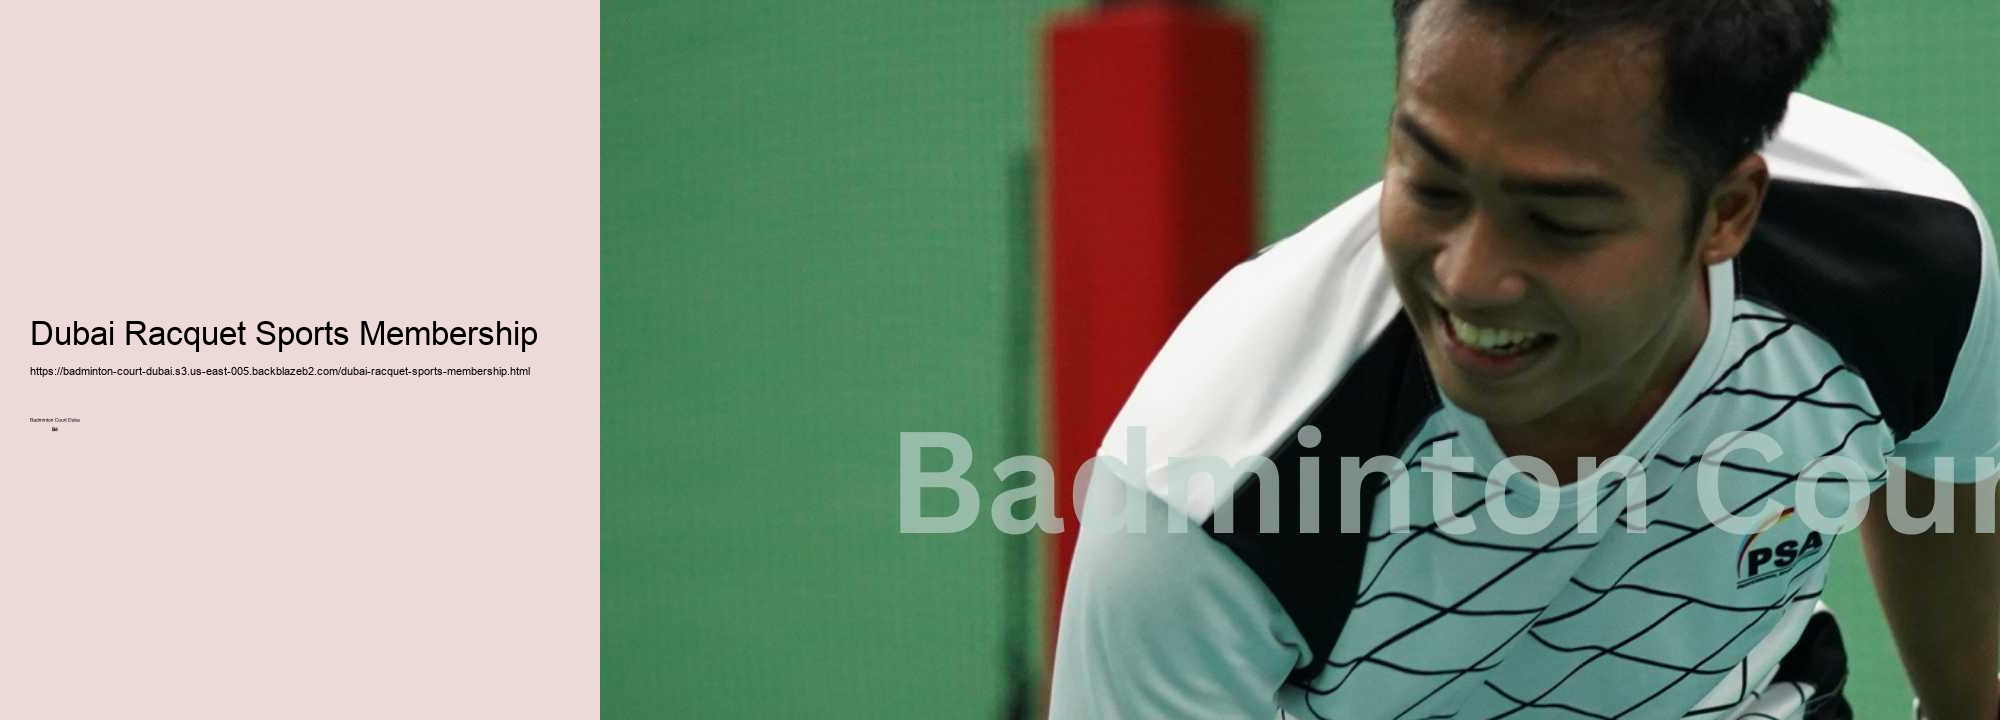 Dubai Racquet Sports Membership